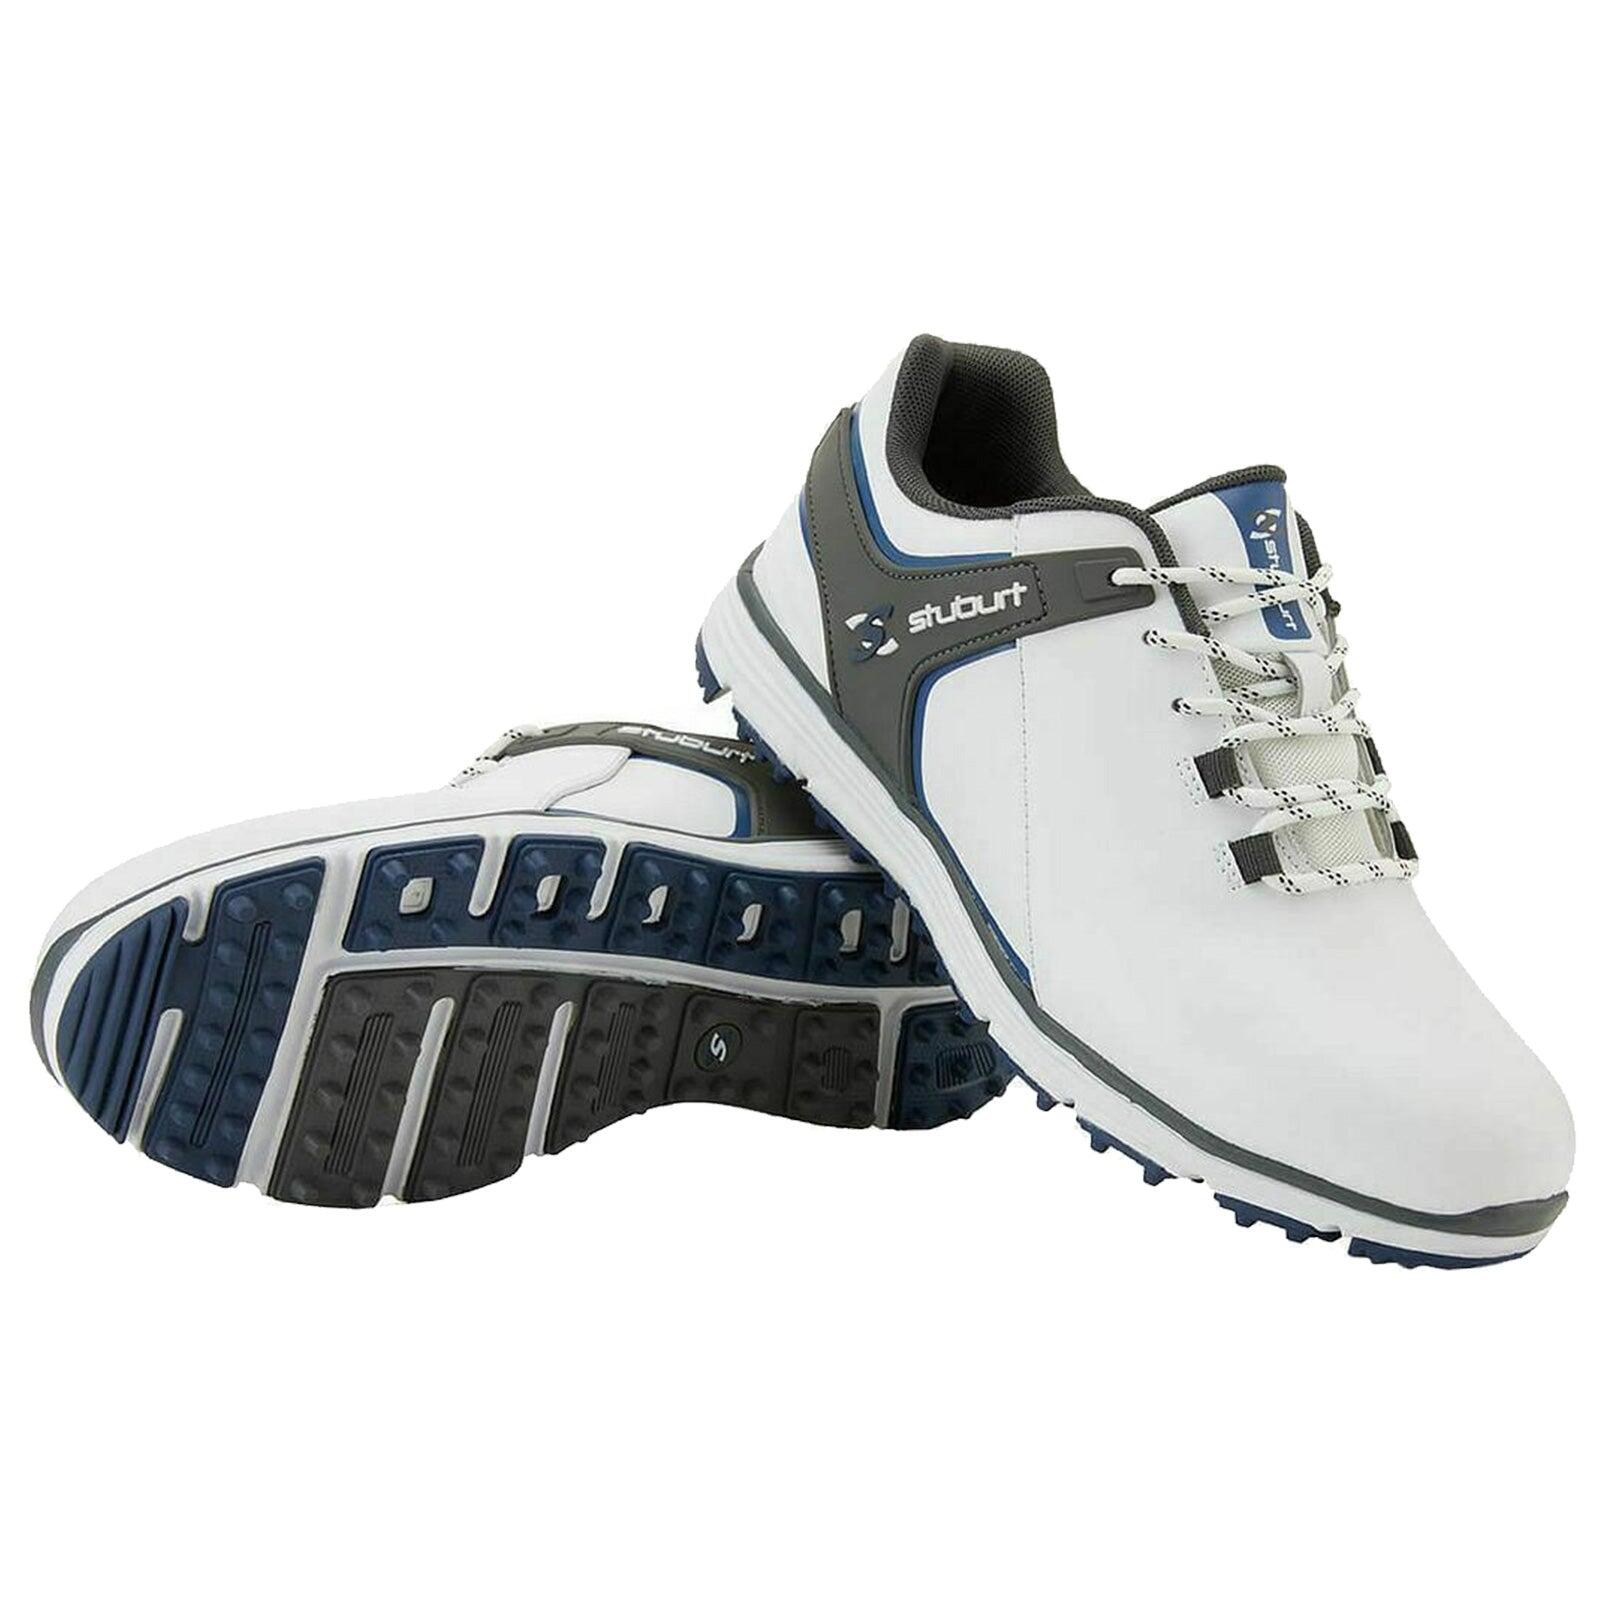 Stuburt Evolve 3.0 Spikeless Golf Shoes - White 5/5